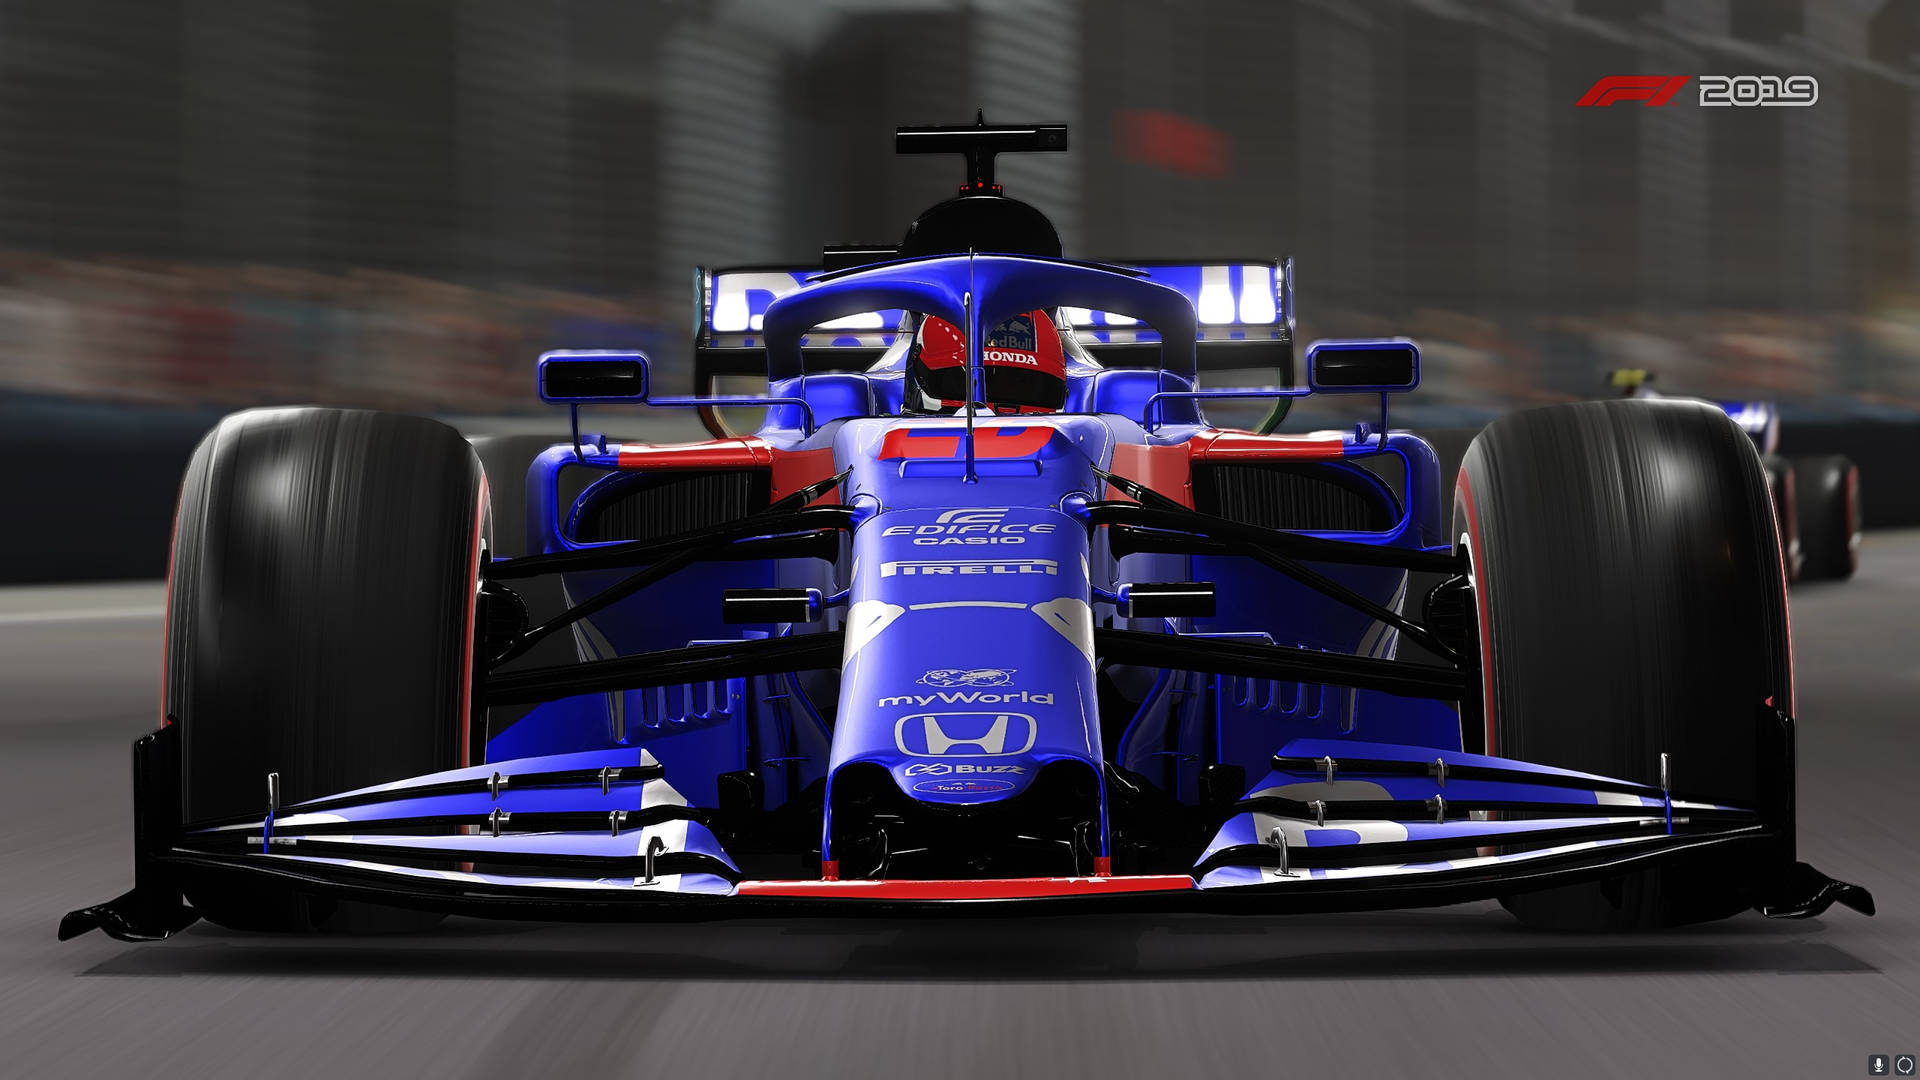 Torro Rosso's #26 Car In F1 2019 Background